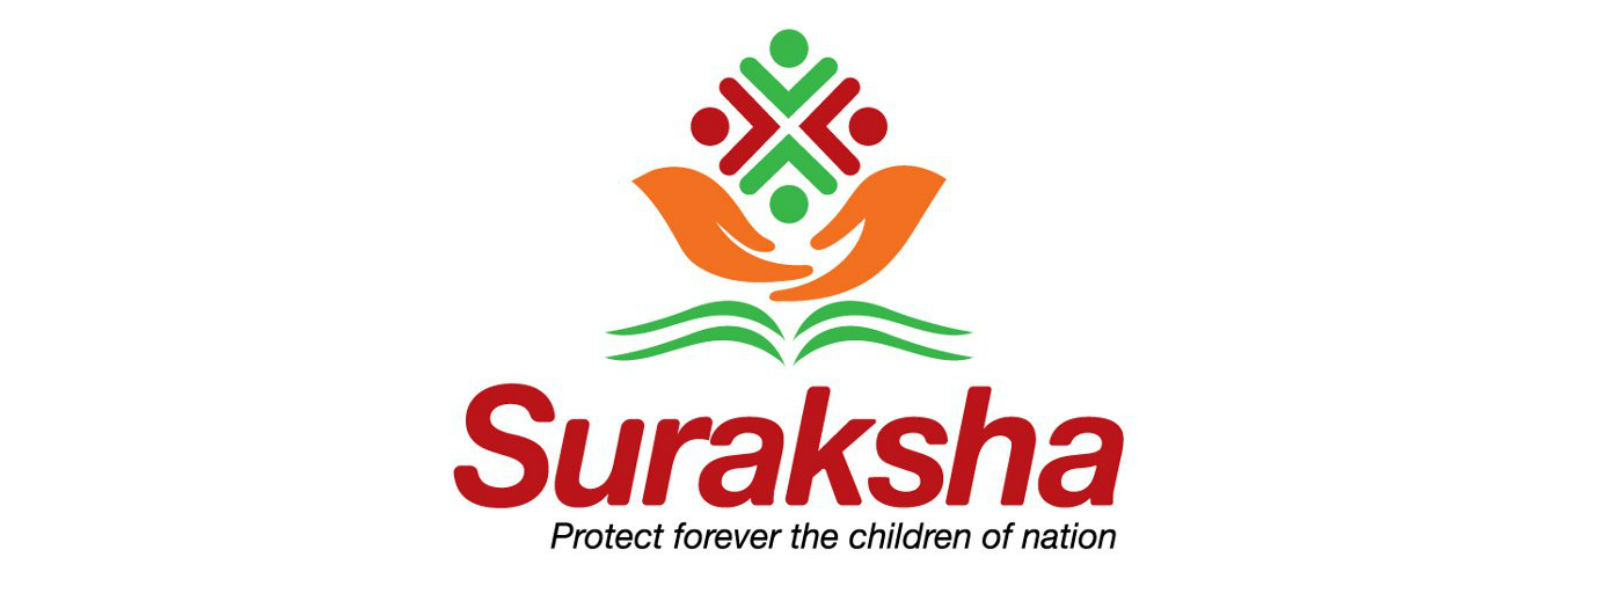 Suraksha insurance scandal rocks Education Min.